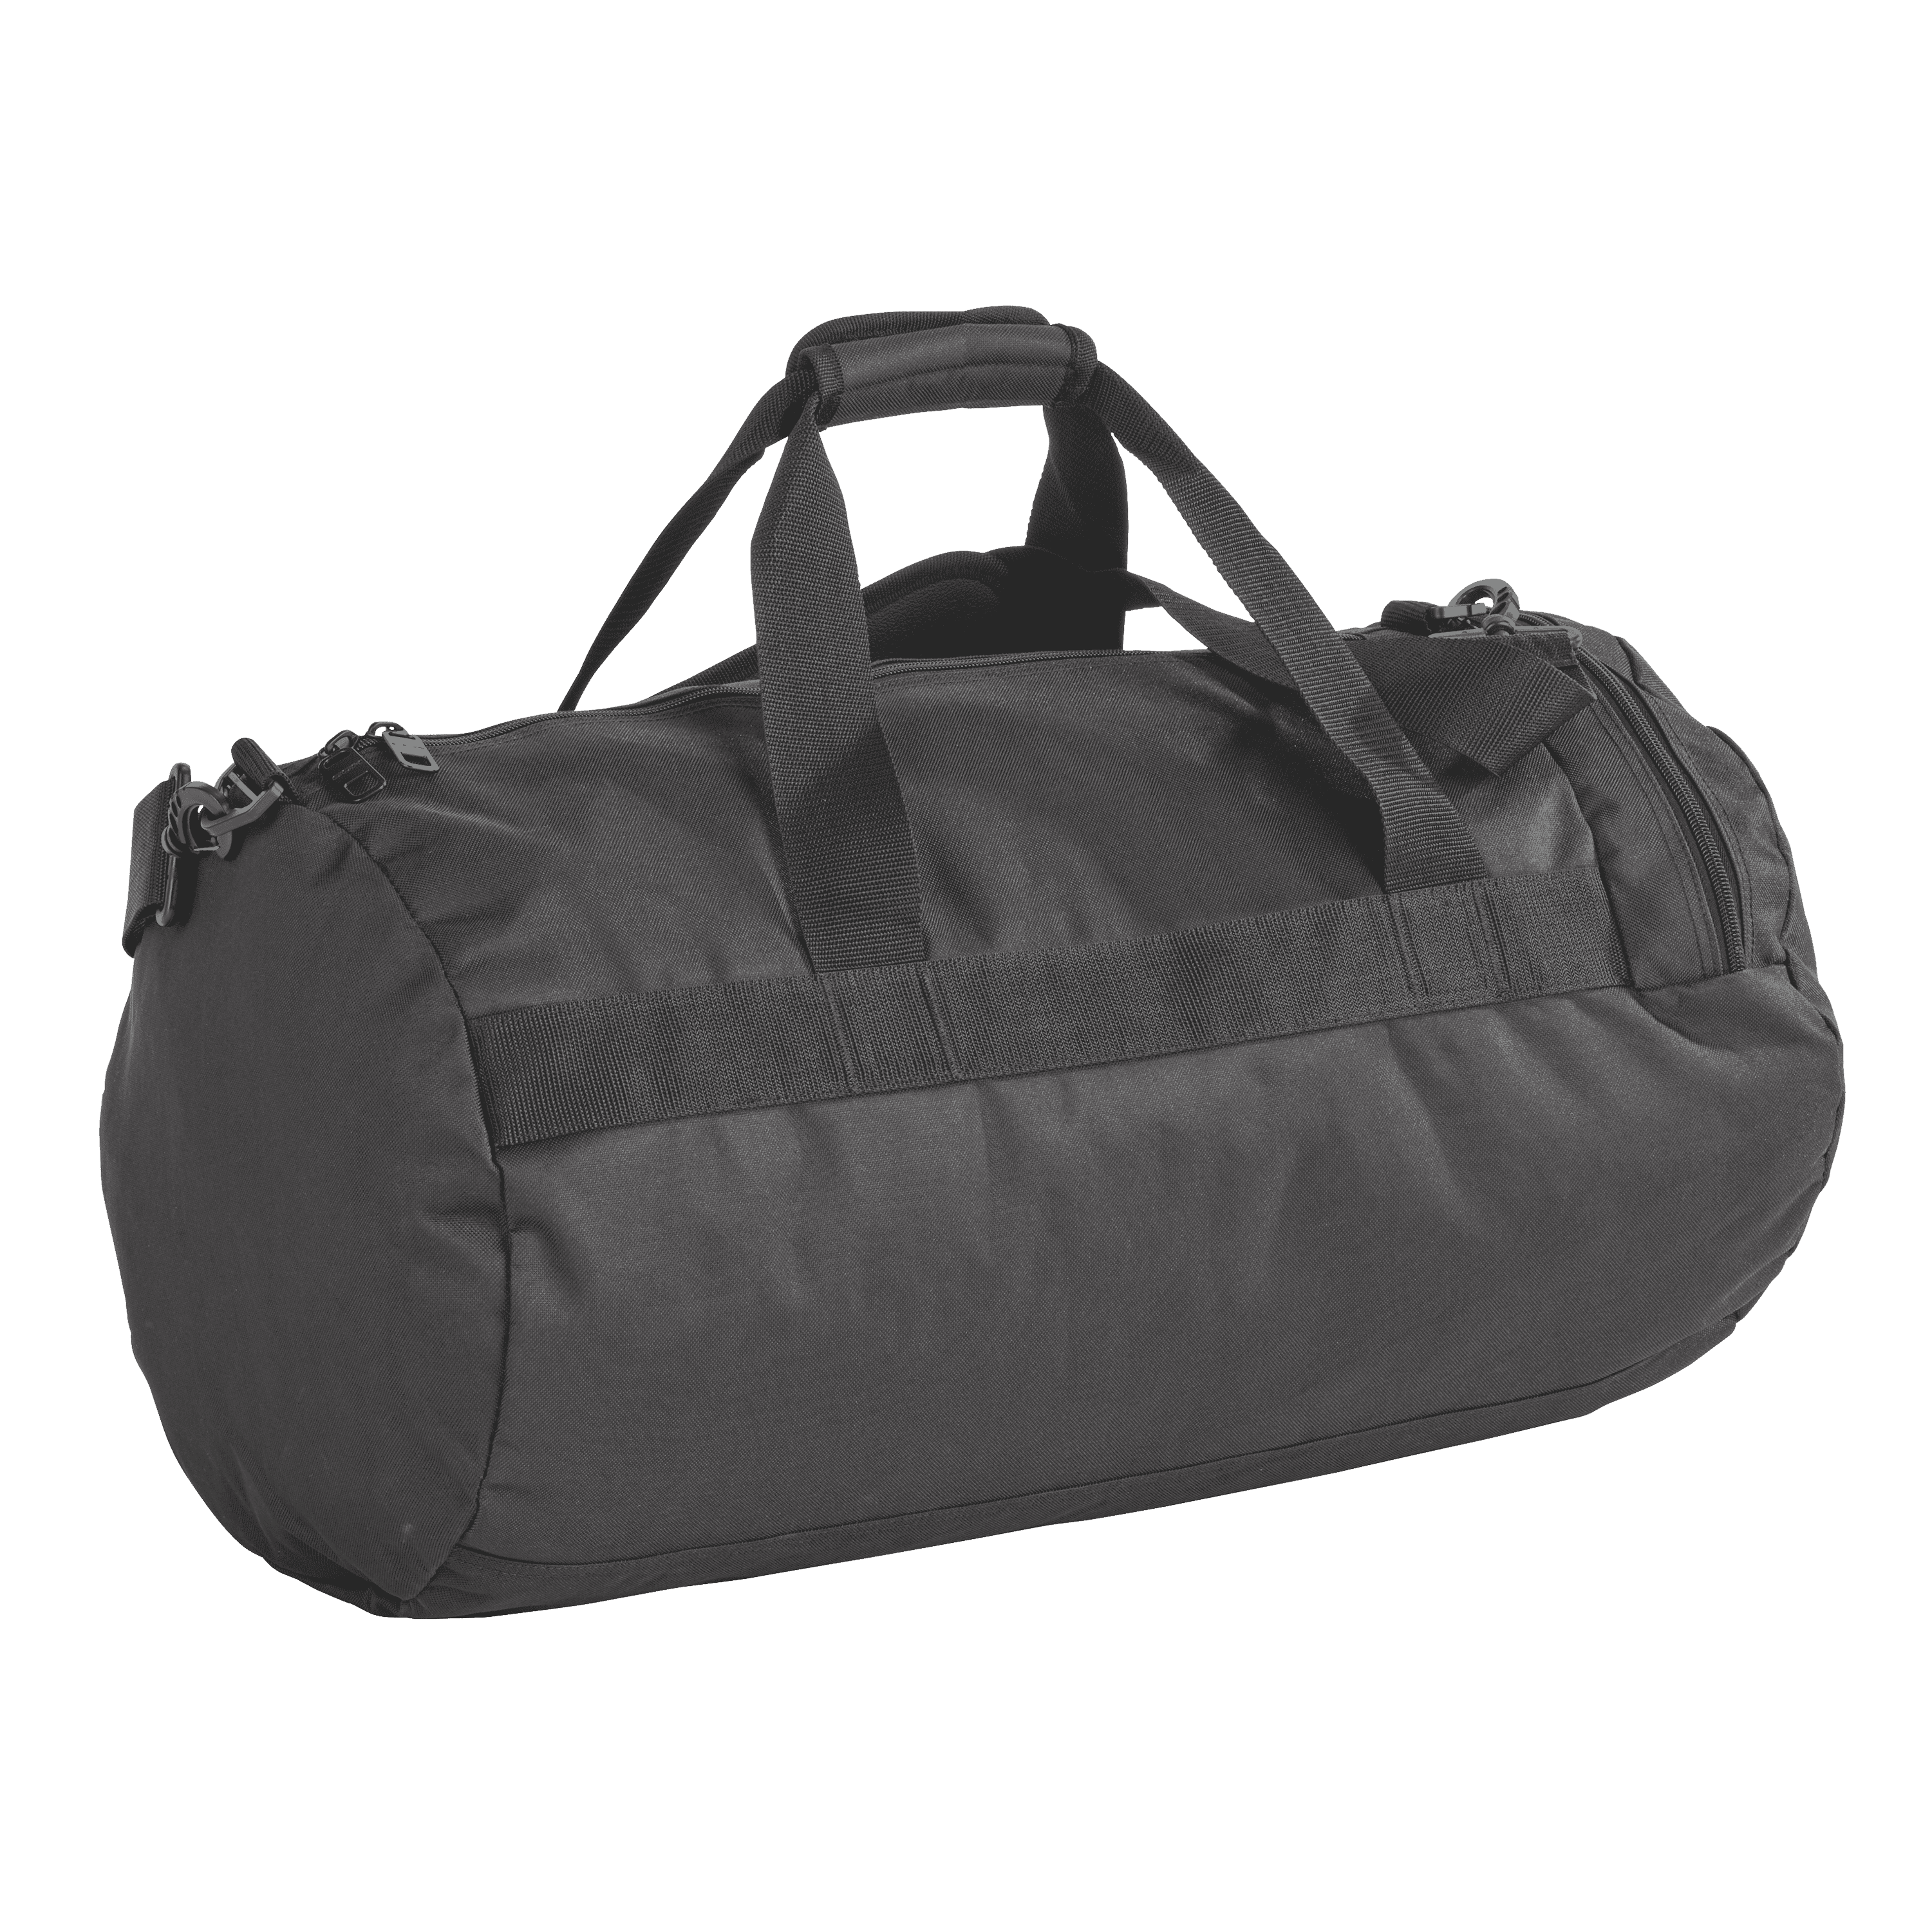 Tasche CCM Sport Bag 3.0 24"L x 13"H x 13" W